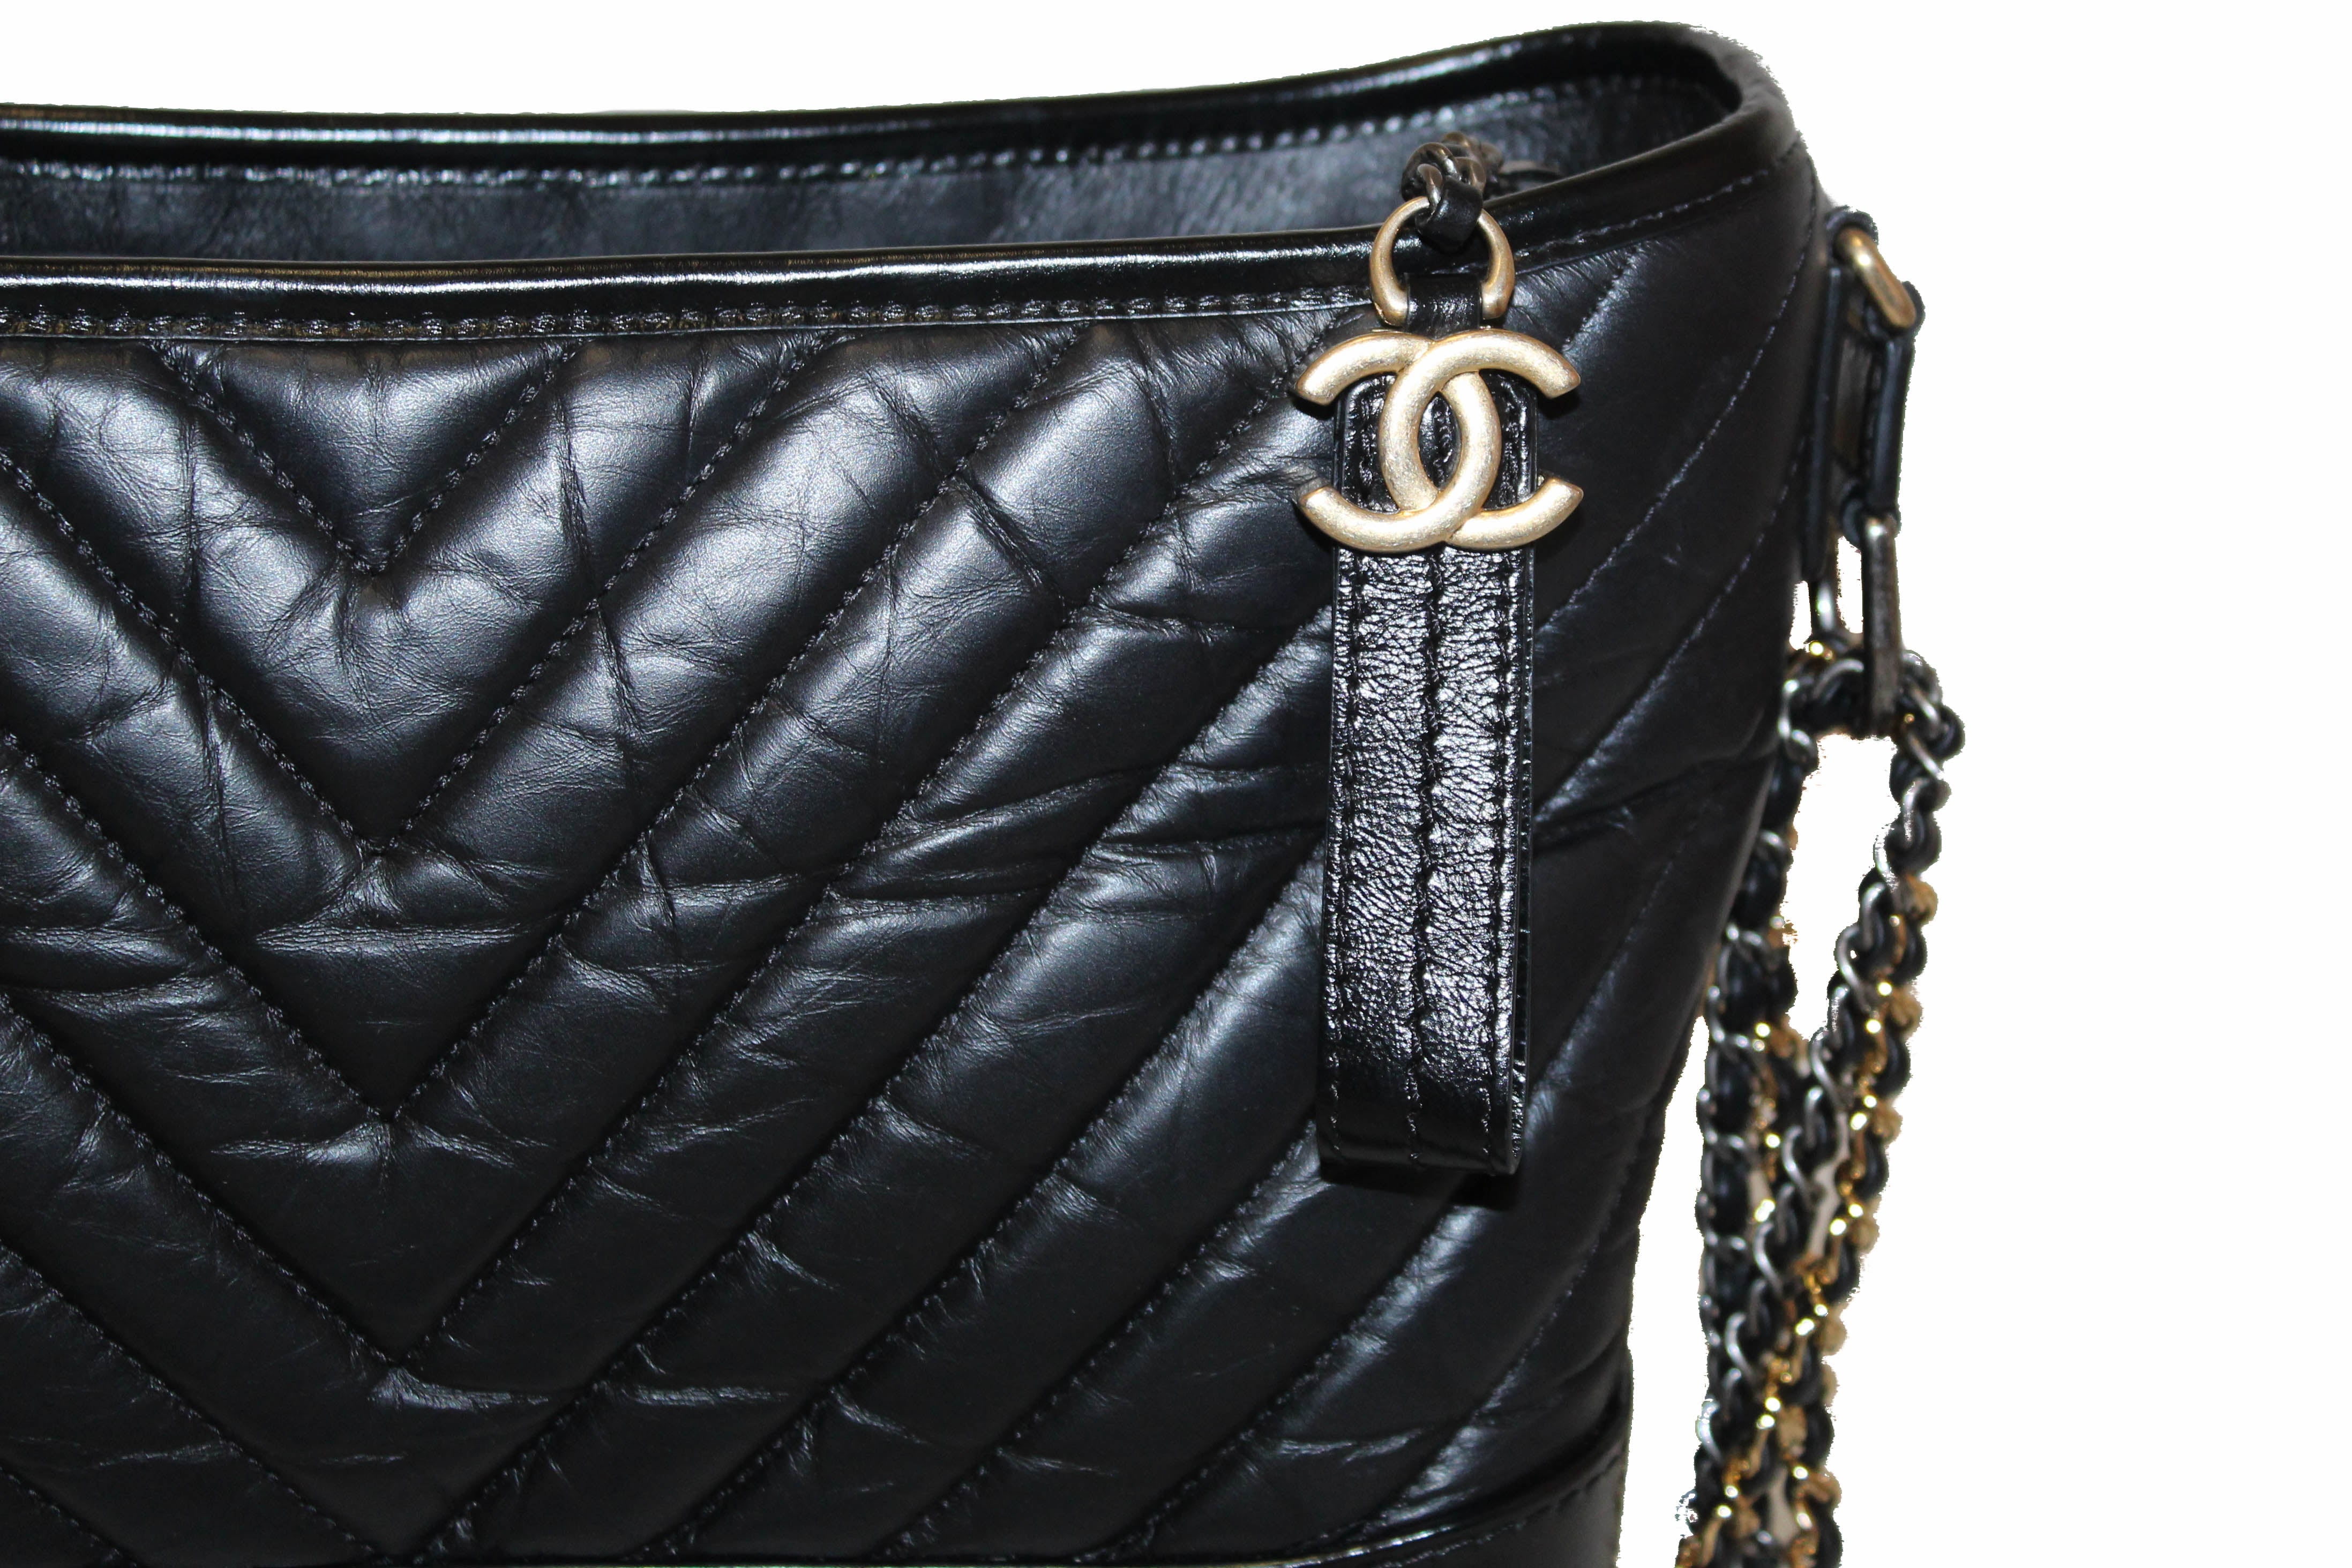 Authentic Chanel Medium Gabrielle Black Chevron Aged Calfskin Leather Hobo Bag